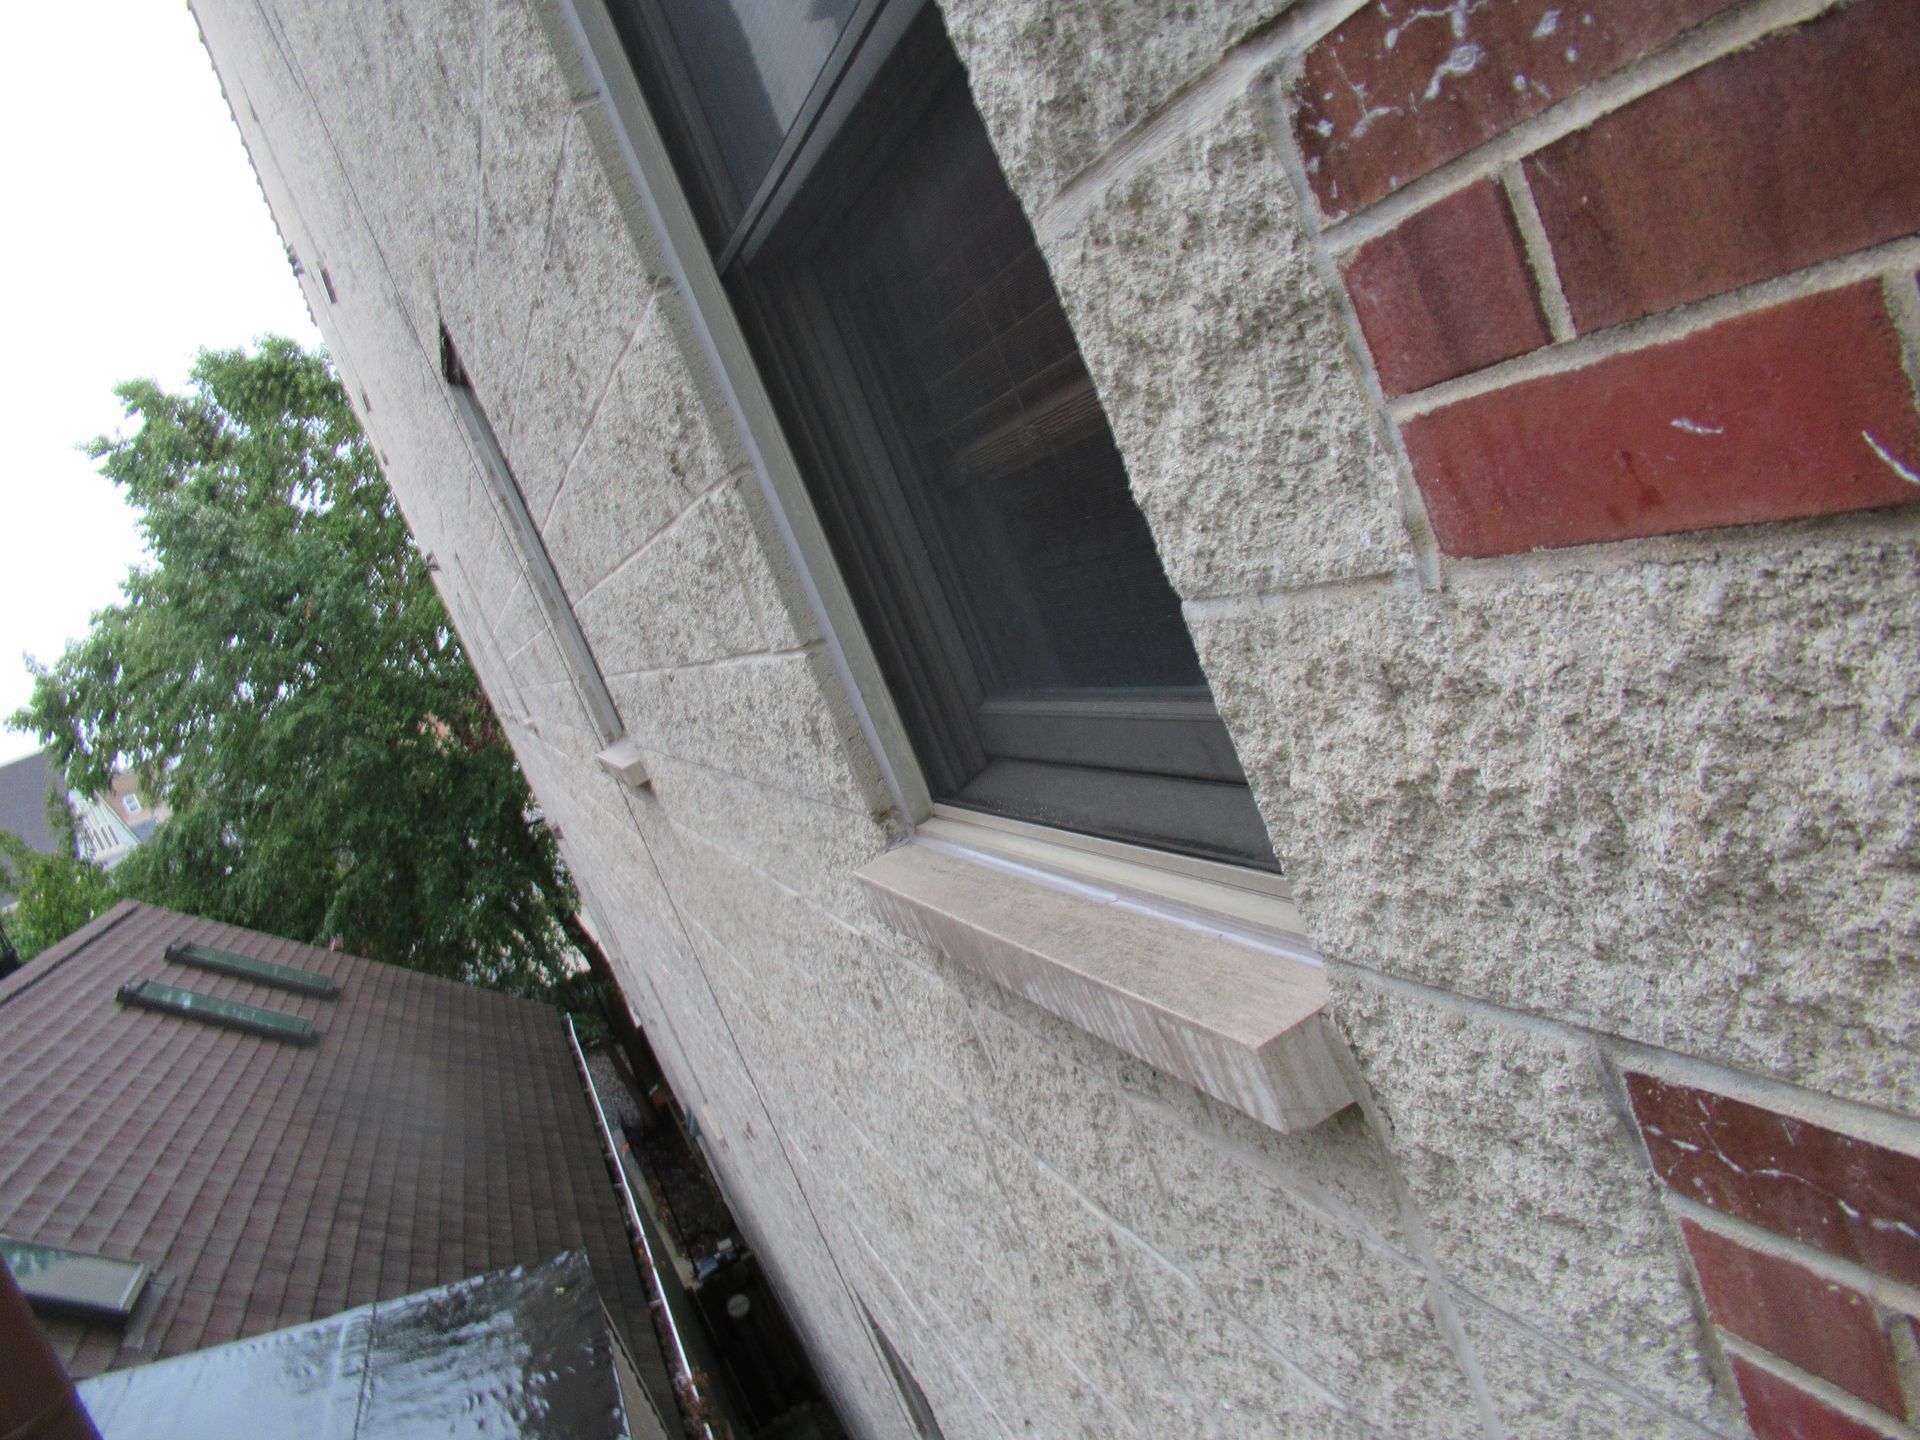 Unflashing limestone window sill causing leaking, Uptown, Chicago